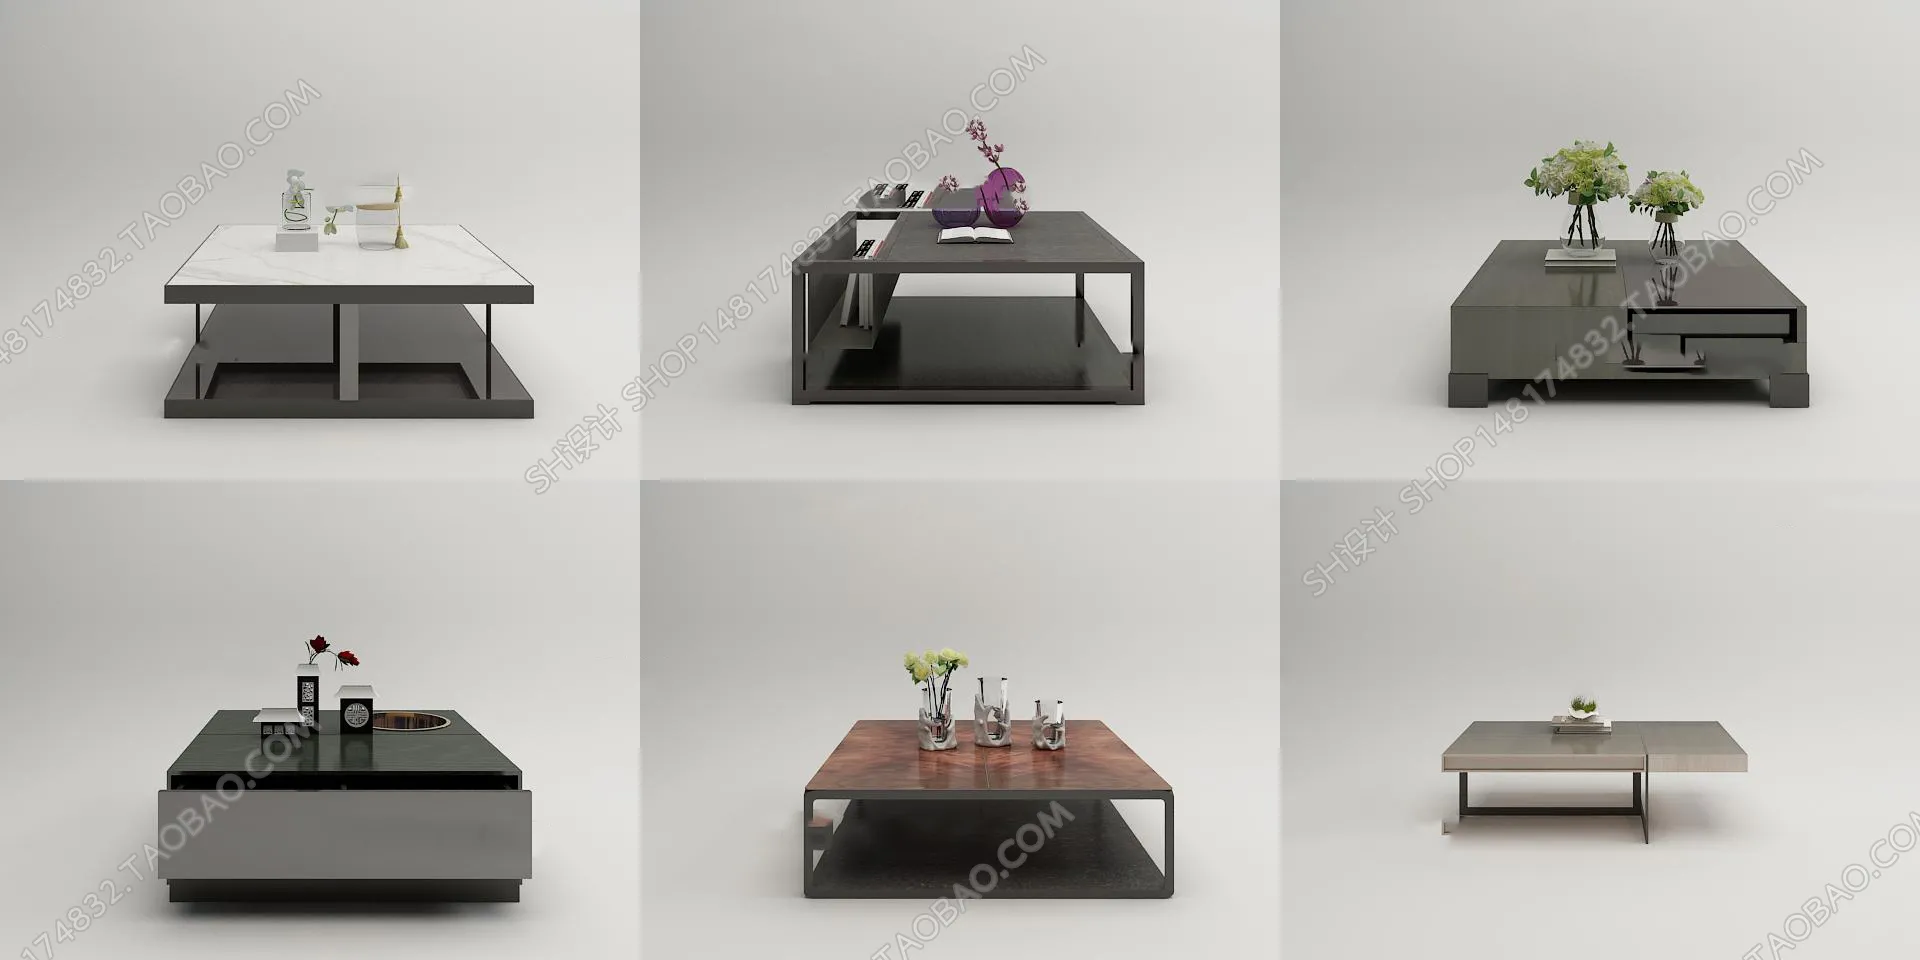 3DSKY MODELS – COFFEE TABLE 3D MODELS – 010